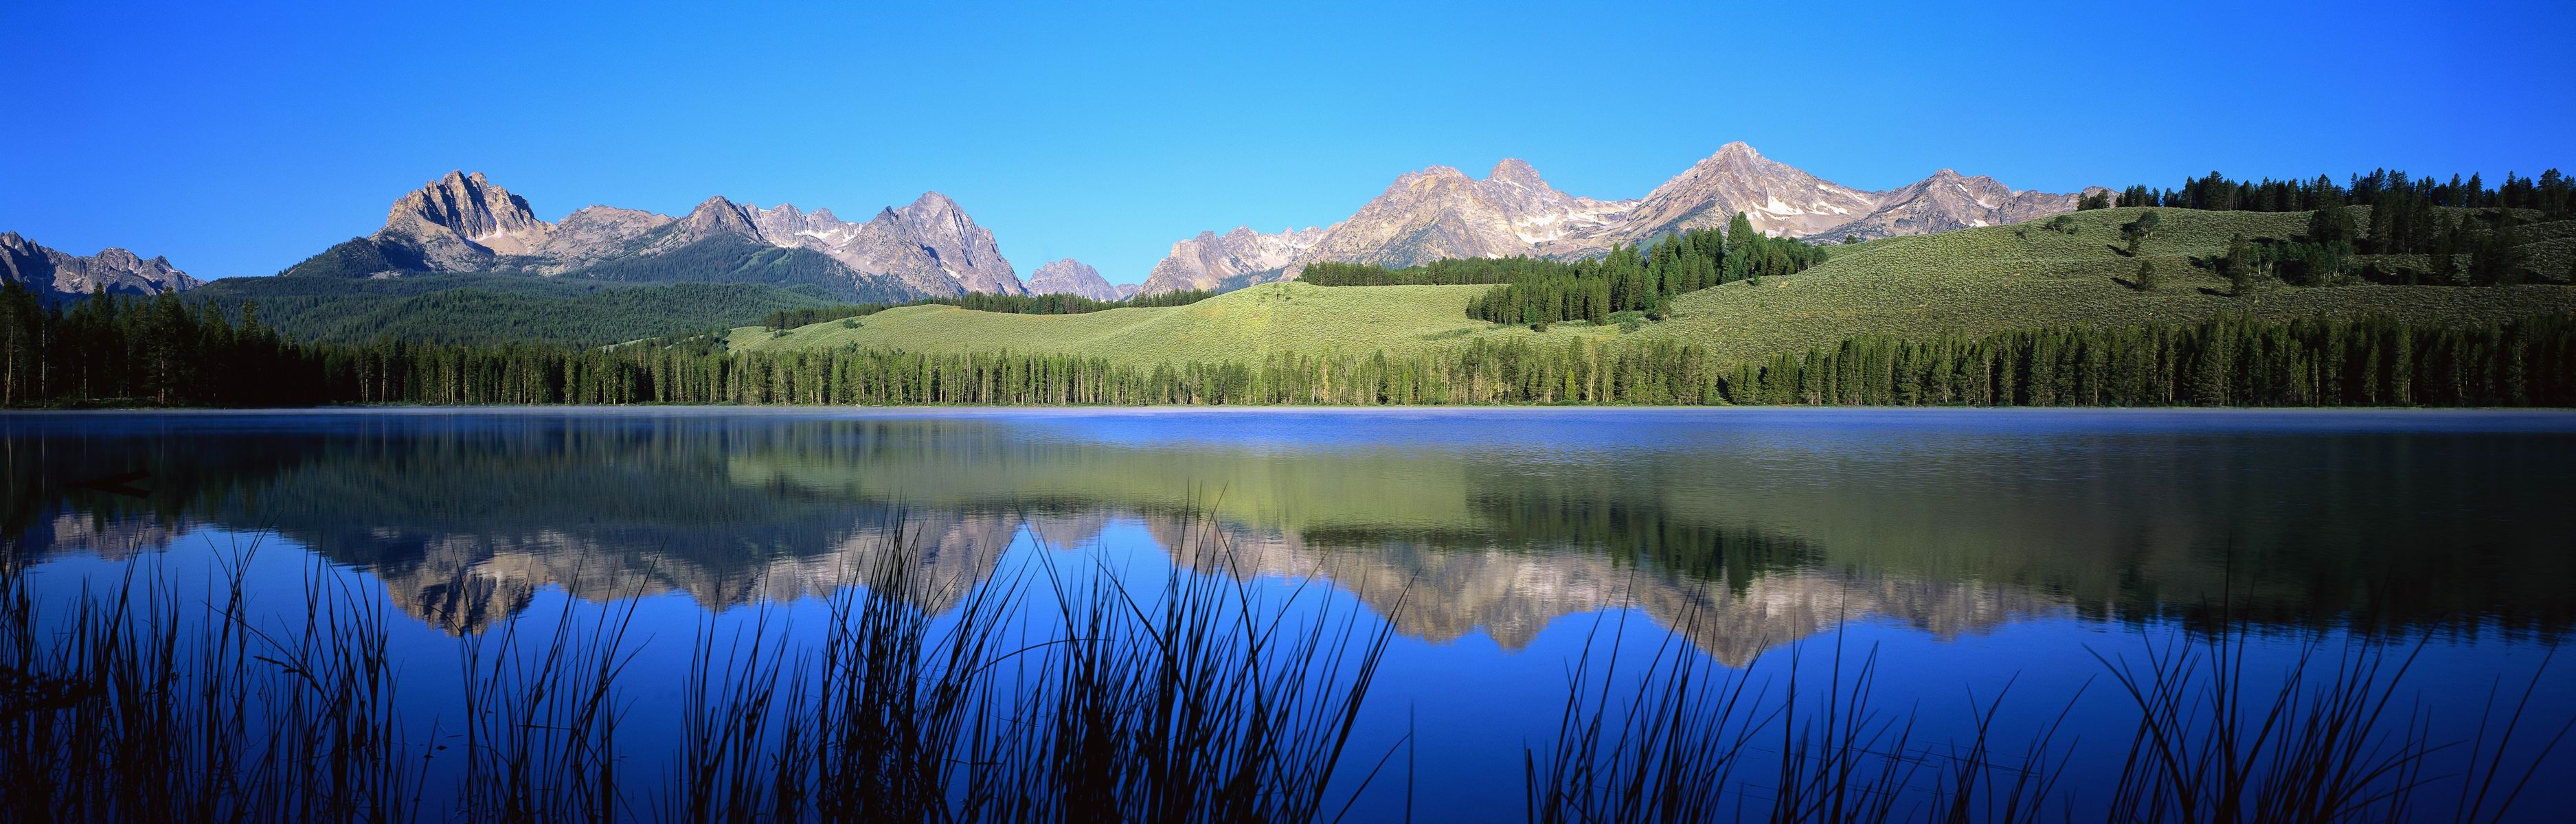 panoramic desktop wallpaper dual monitors,natural landscape,nature,mountain,mountainous landforms,reflection